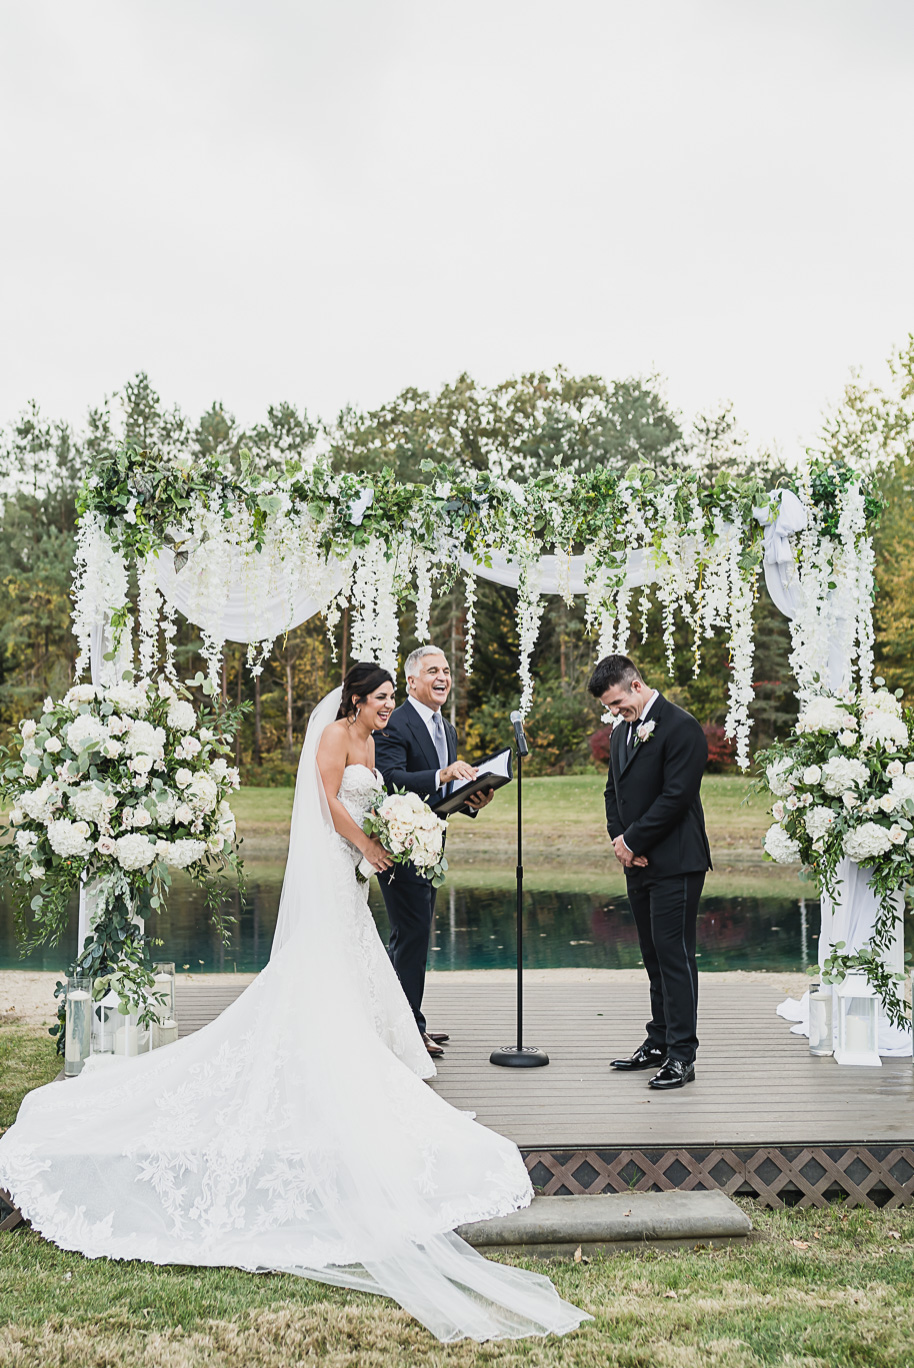 An intimate black tie backyard wedding in Armada Michigan provided by Kari Dawson top rated Southeastern Michigan wedding photographer and her team.